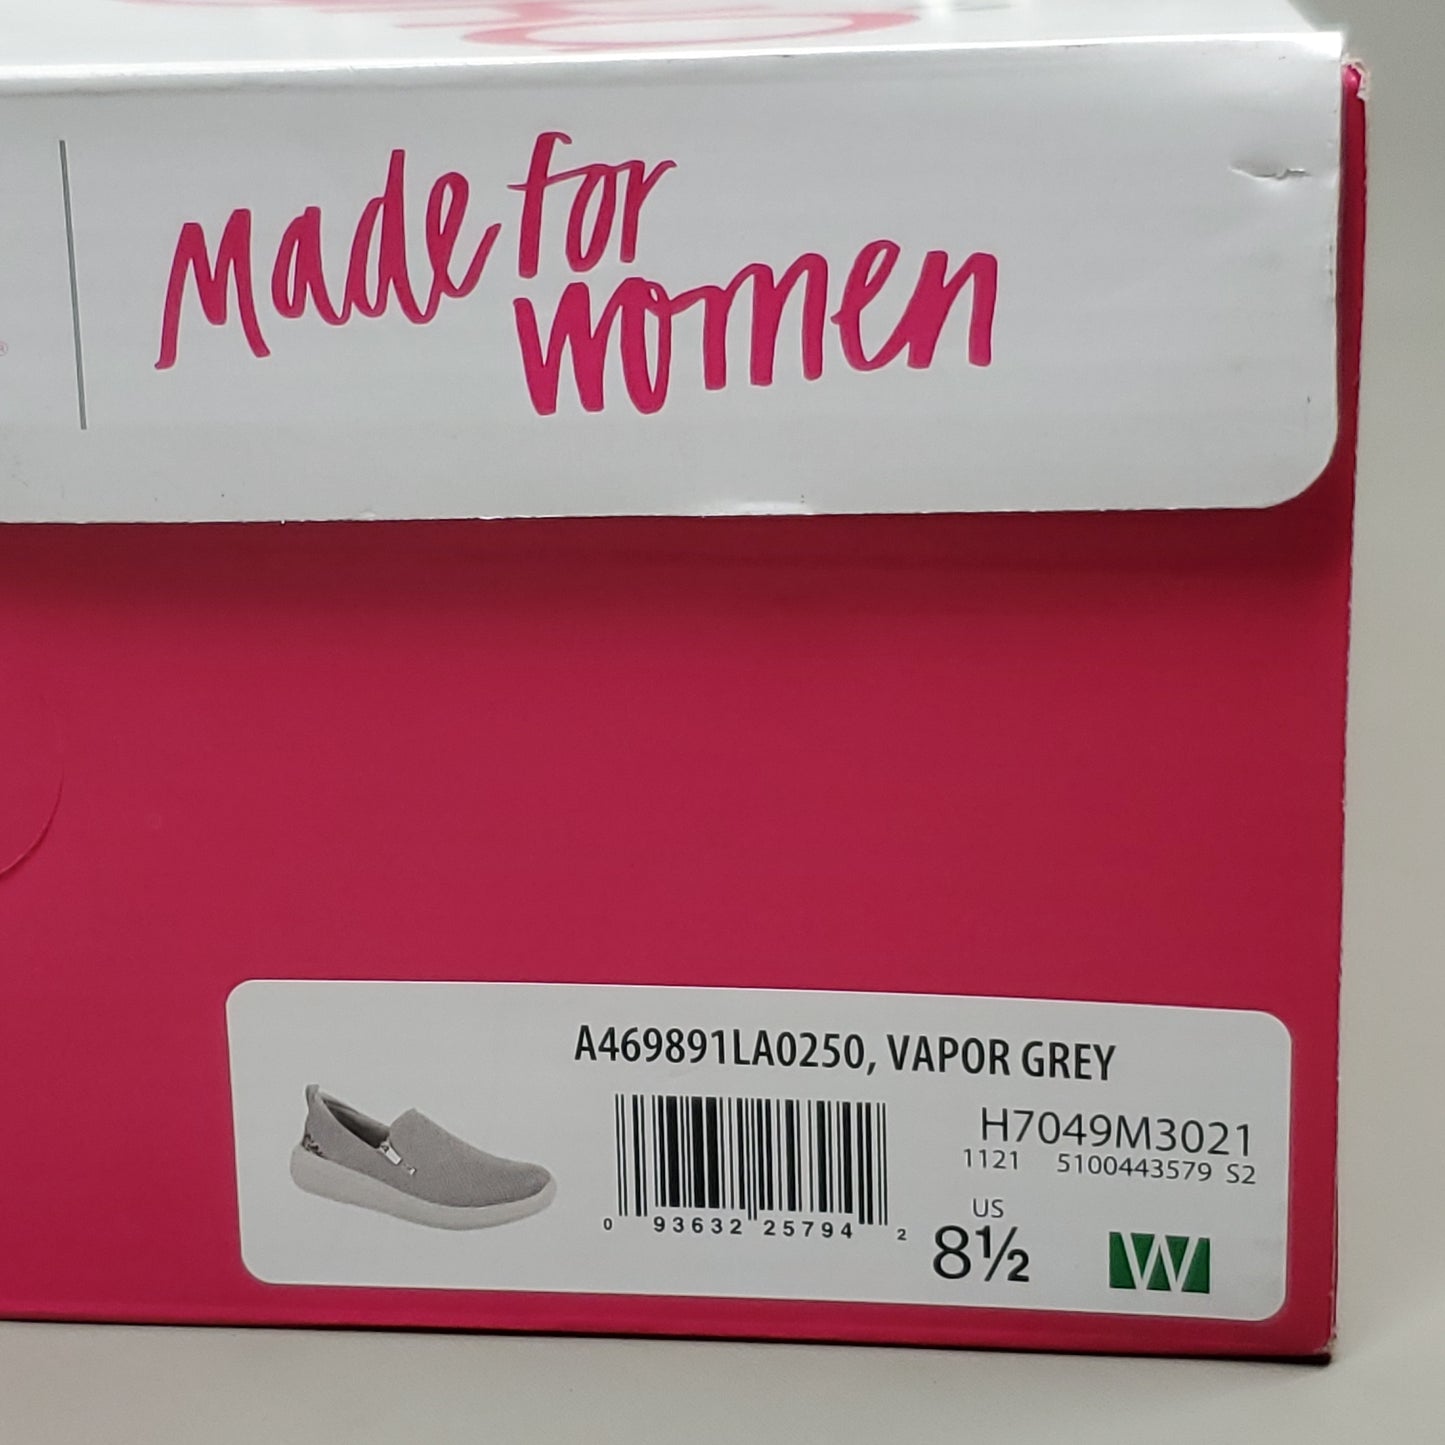 RYKA Mesh Walking Sneaker Shoes Women's SZ 8.5 W Ally Floral Vapor Grey (New)